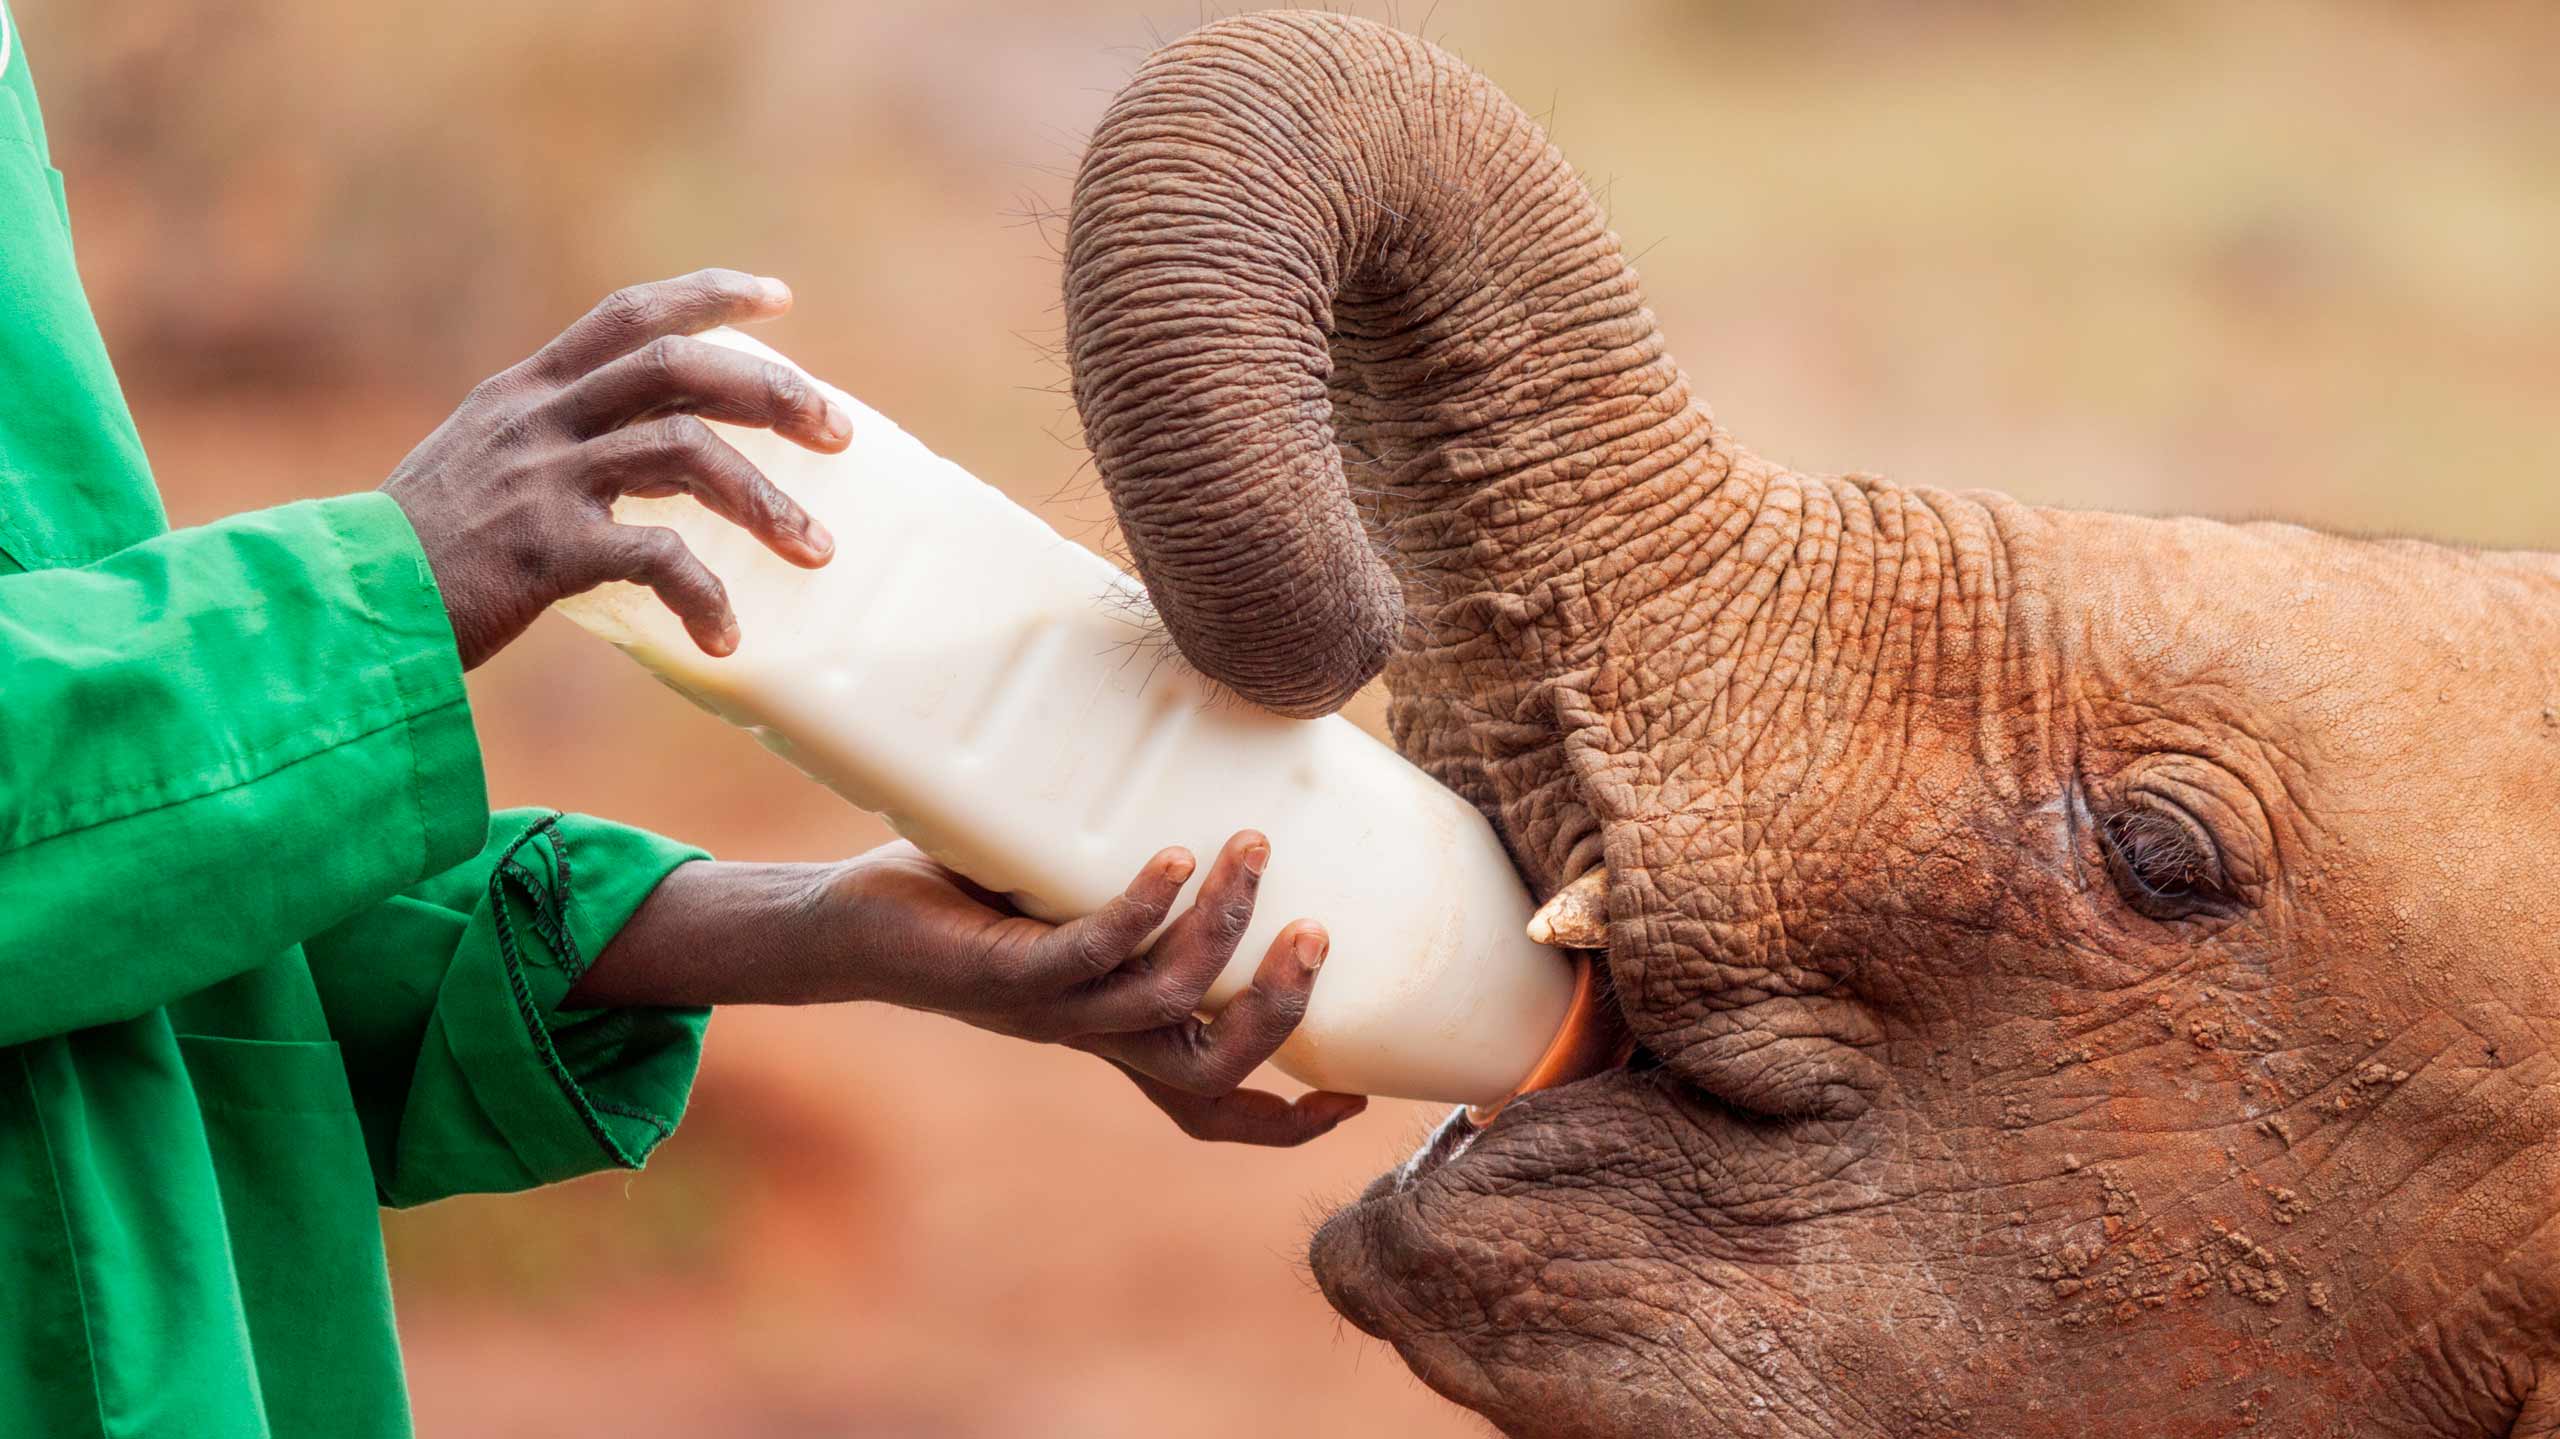 Elephant orphanage in Africa